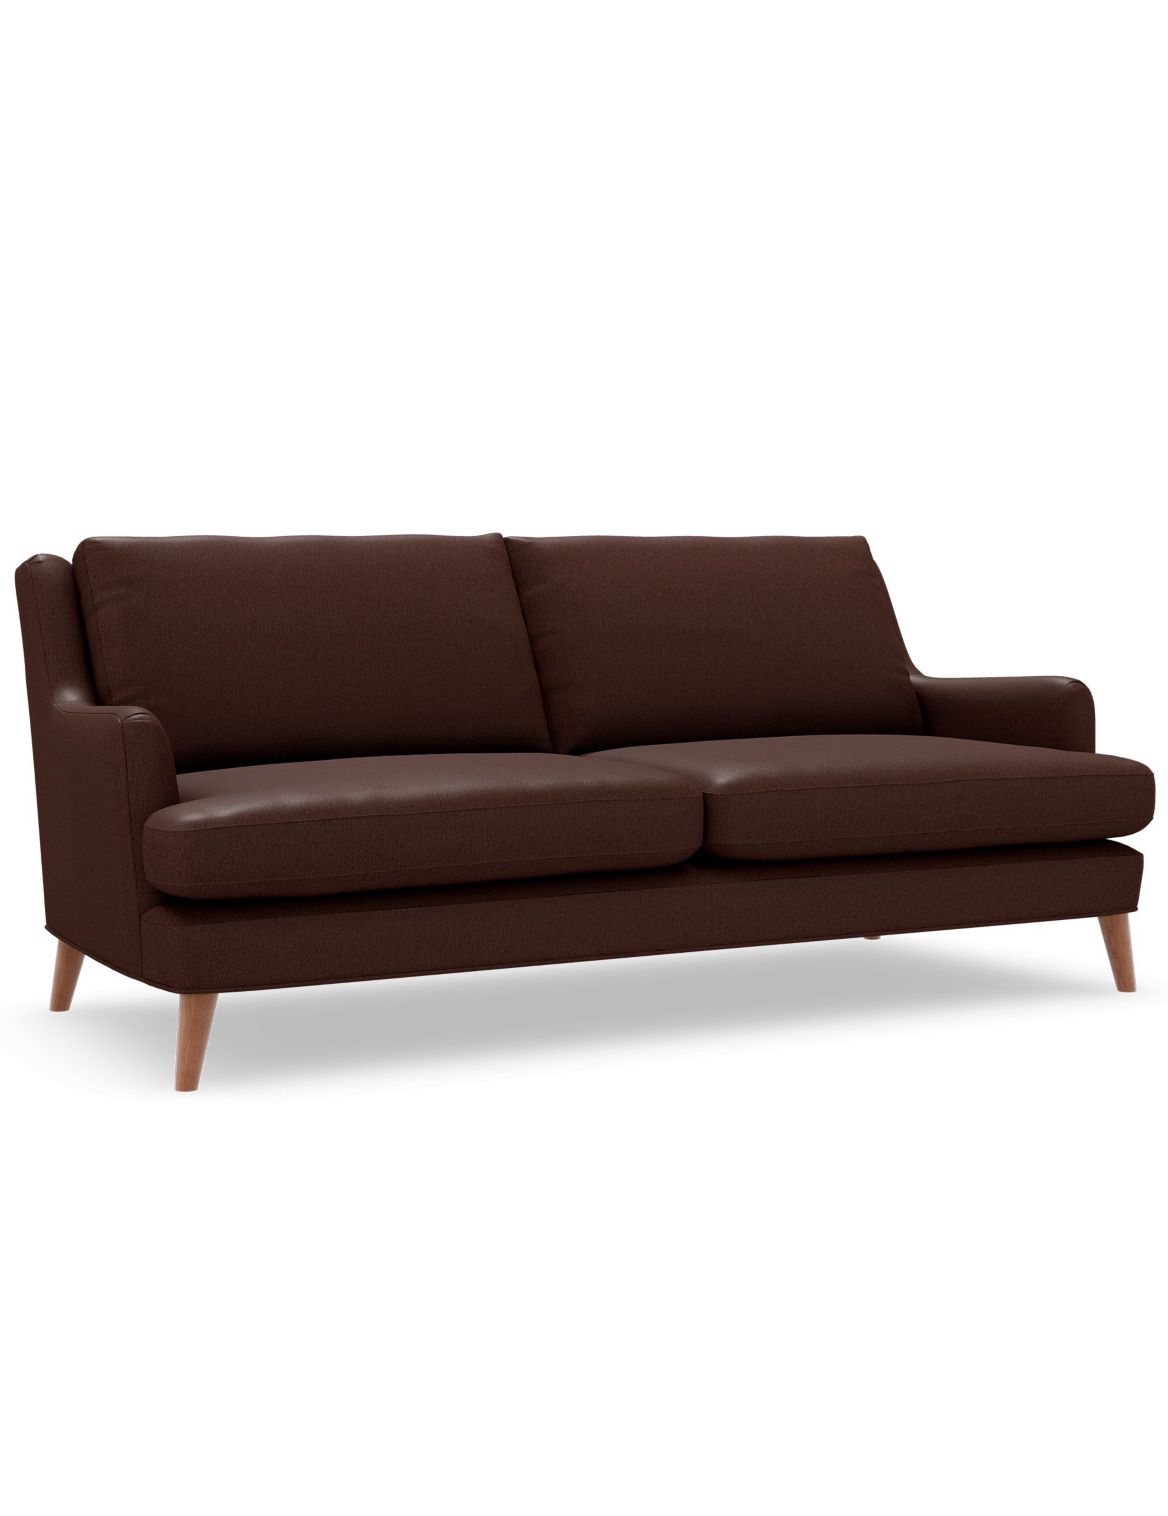 Ashton Large Sofa brown